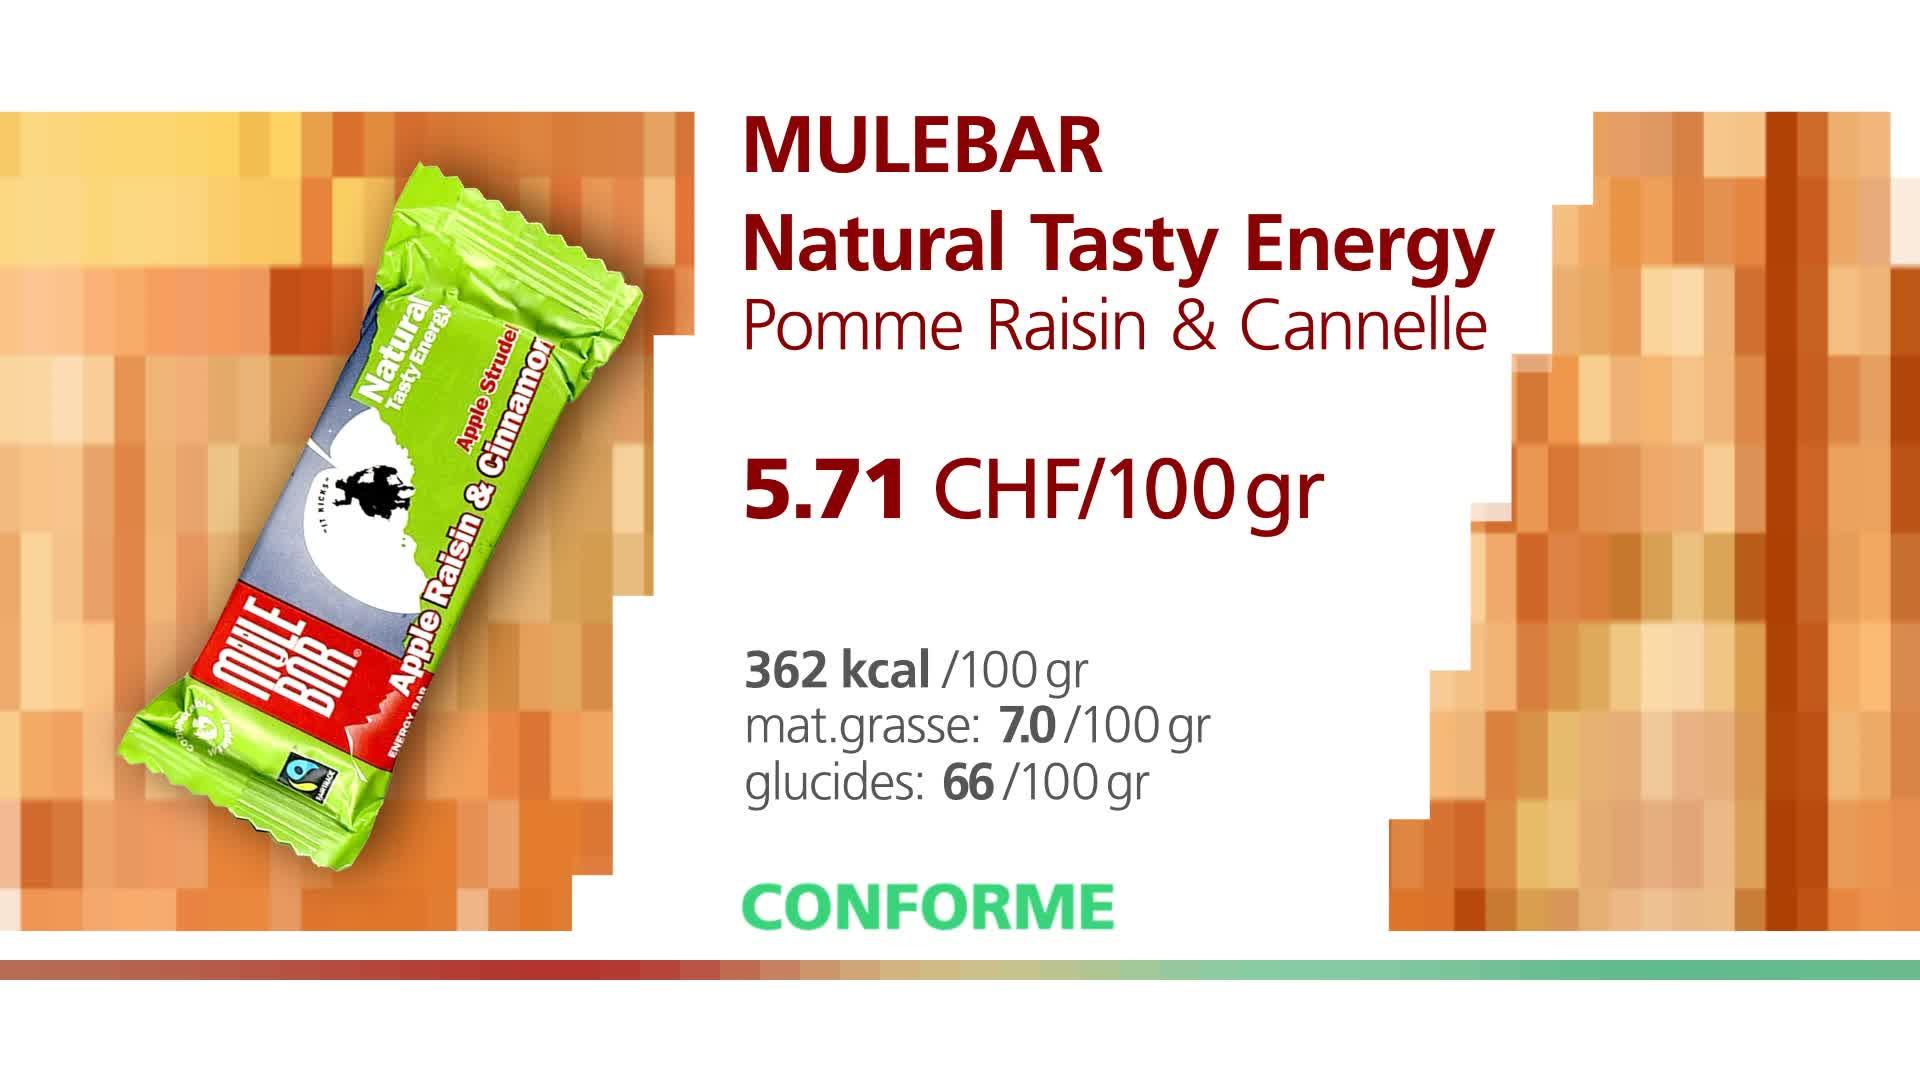 MuleBar Natural Tasty Energy.